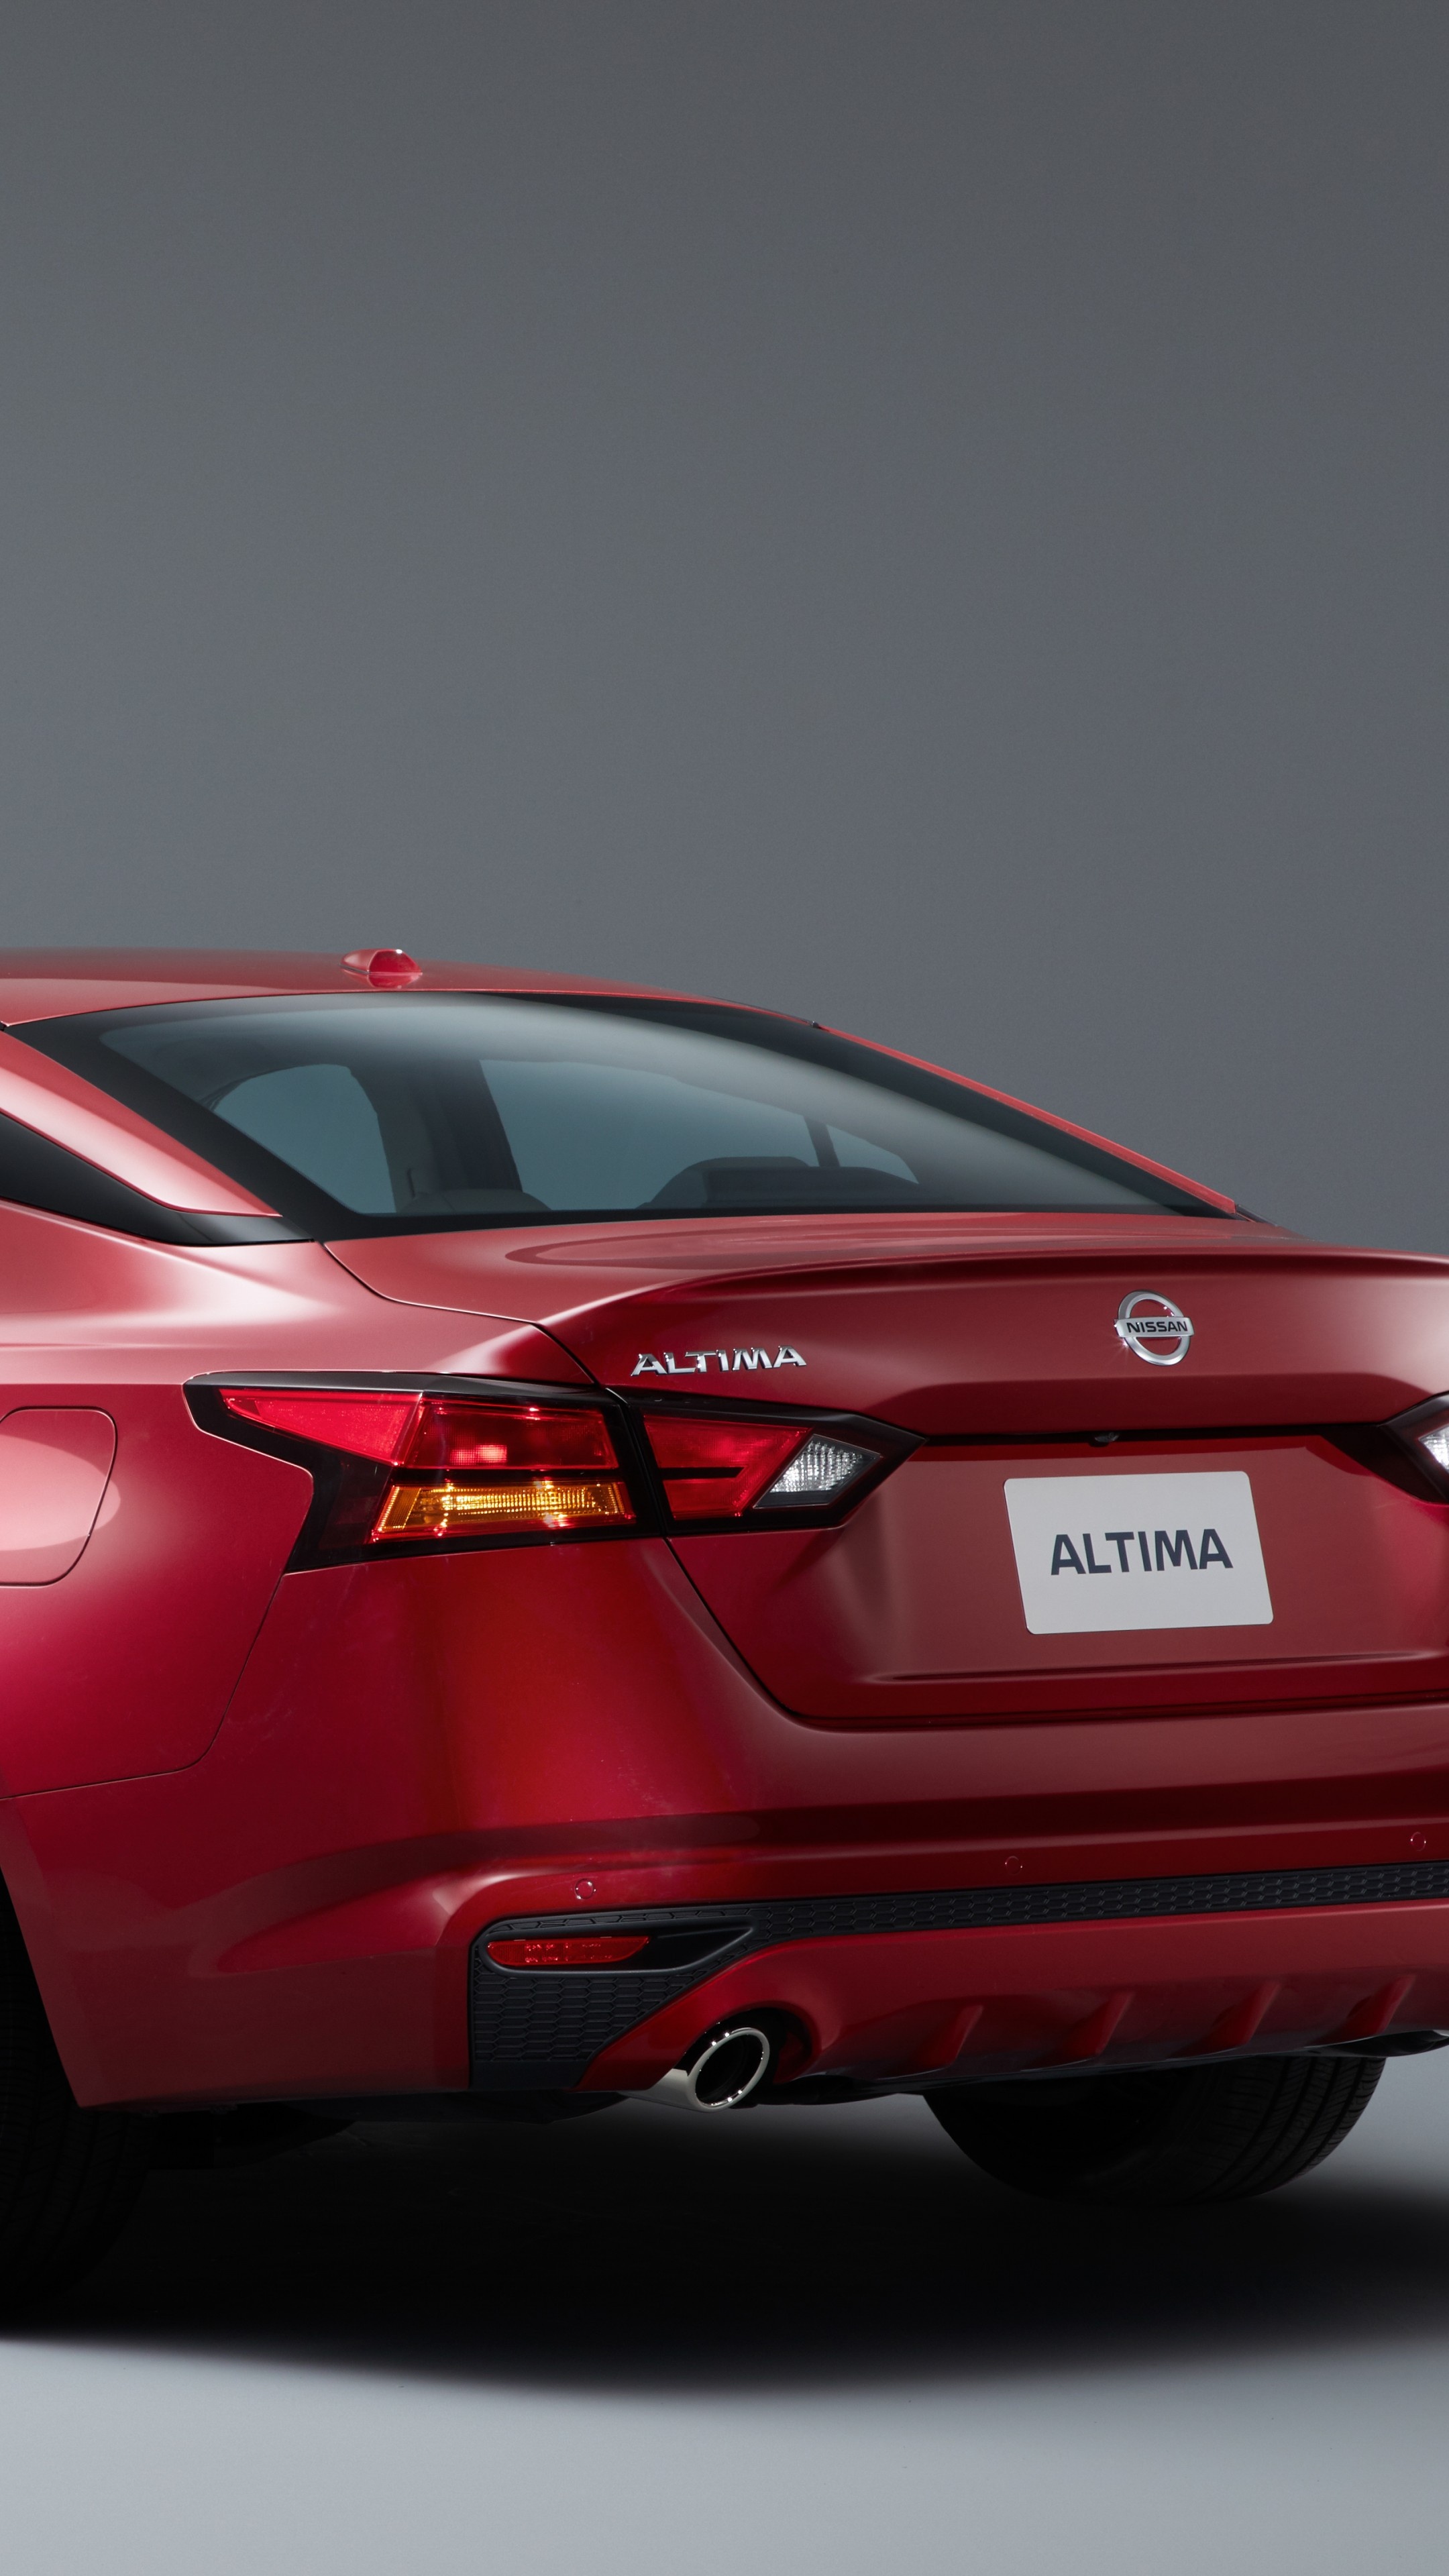 Nissan Altima, 2019 model, 4K cars and bikes, 2160x3840 4K Handy